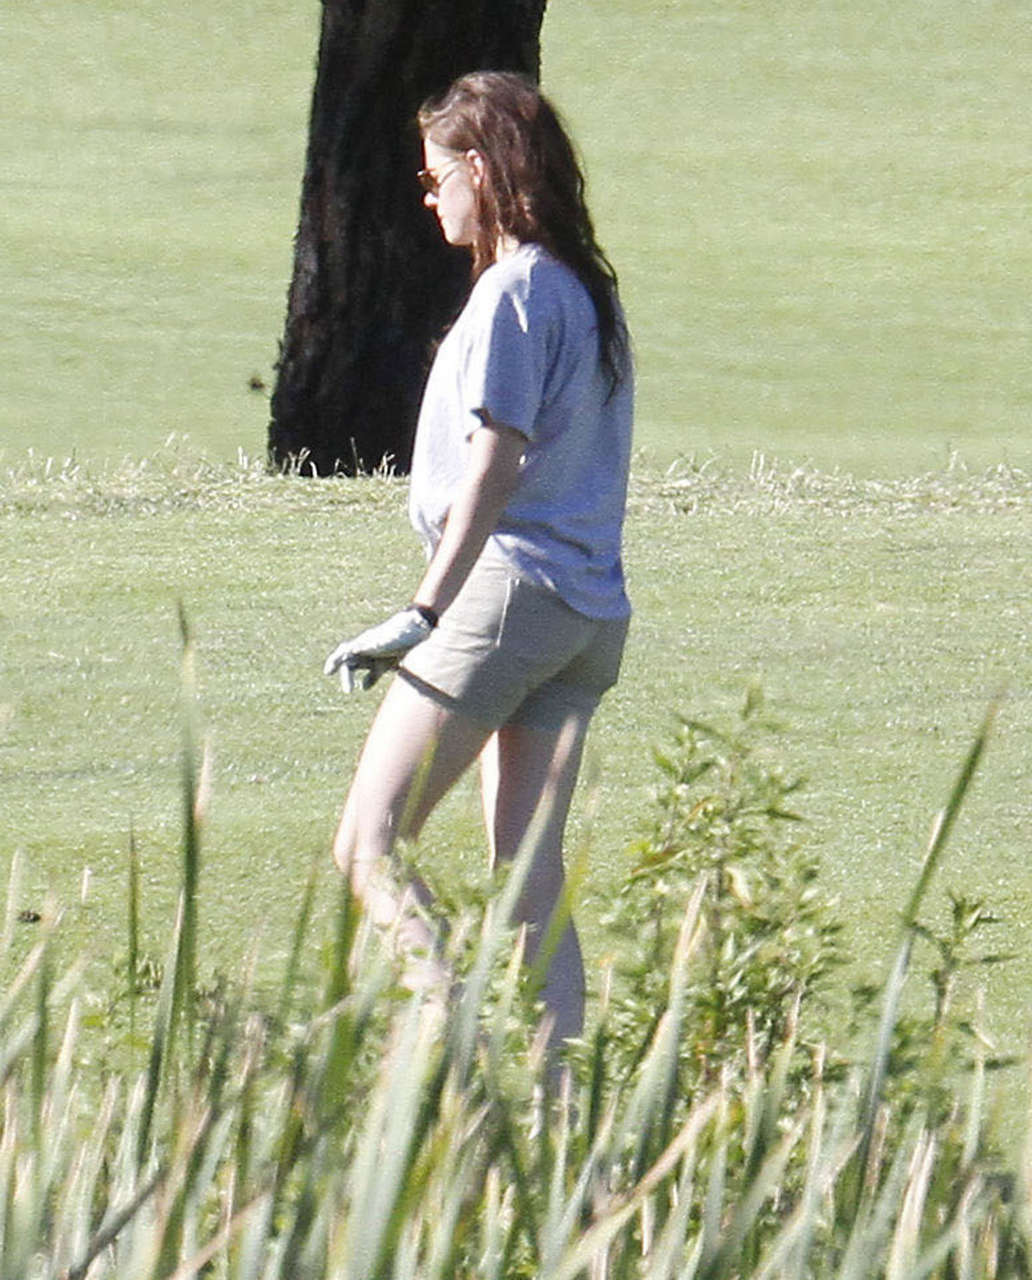 Kristen Stewart Playing Golf Malibu